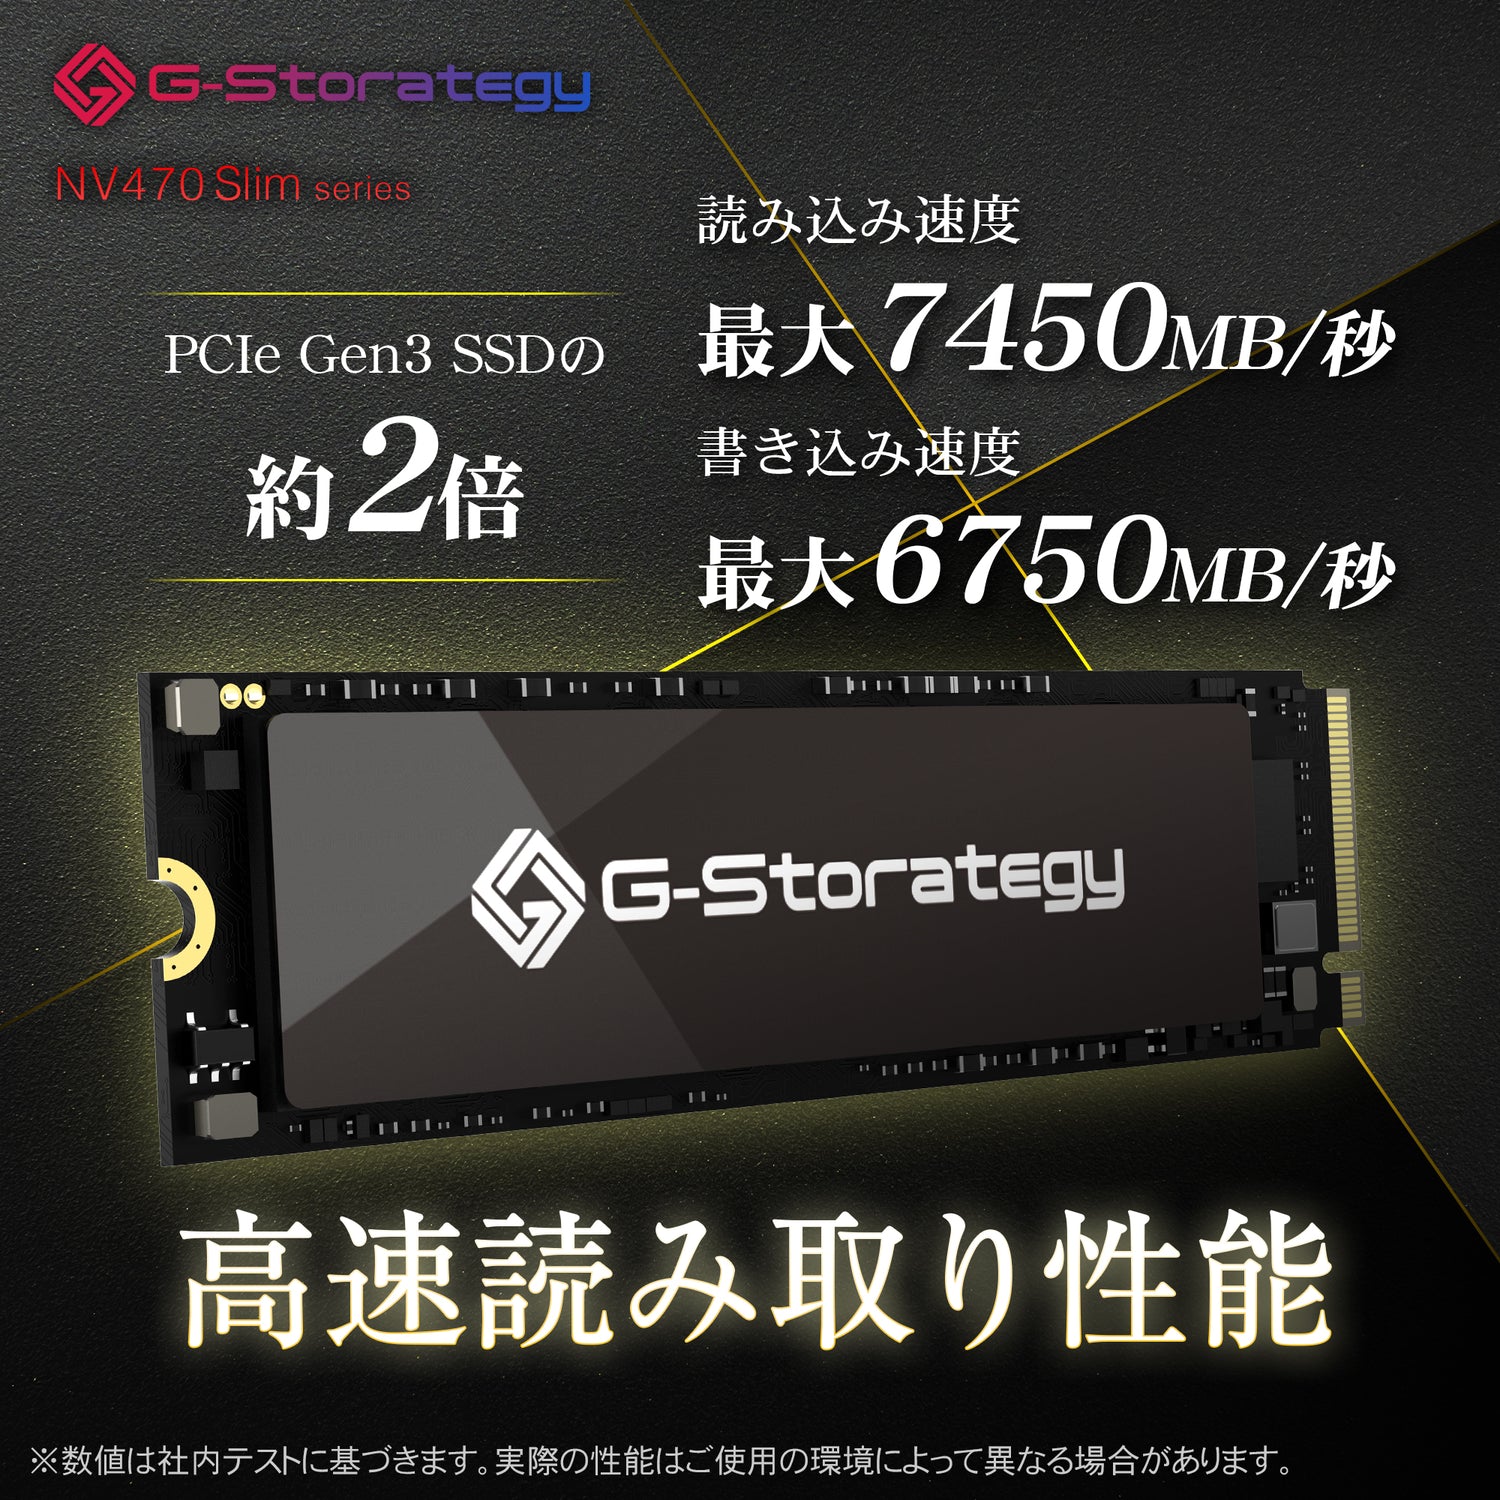 G-Storategy SSD 2TB PS5対応 銅熱伝導シート M.2 Gen4×4 NVMe 5年保証 NV47002TBY3G1NH